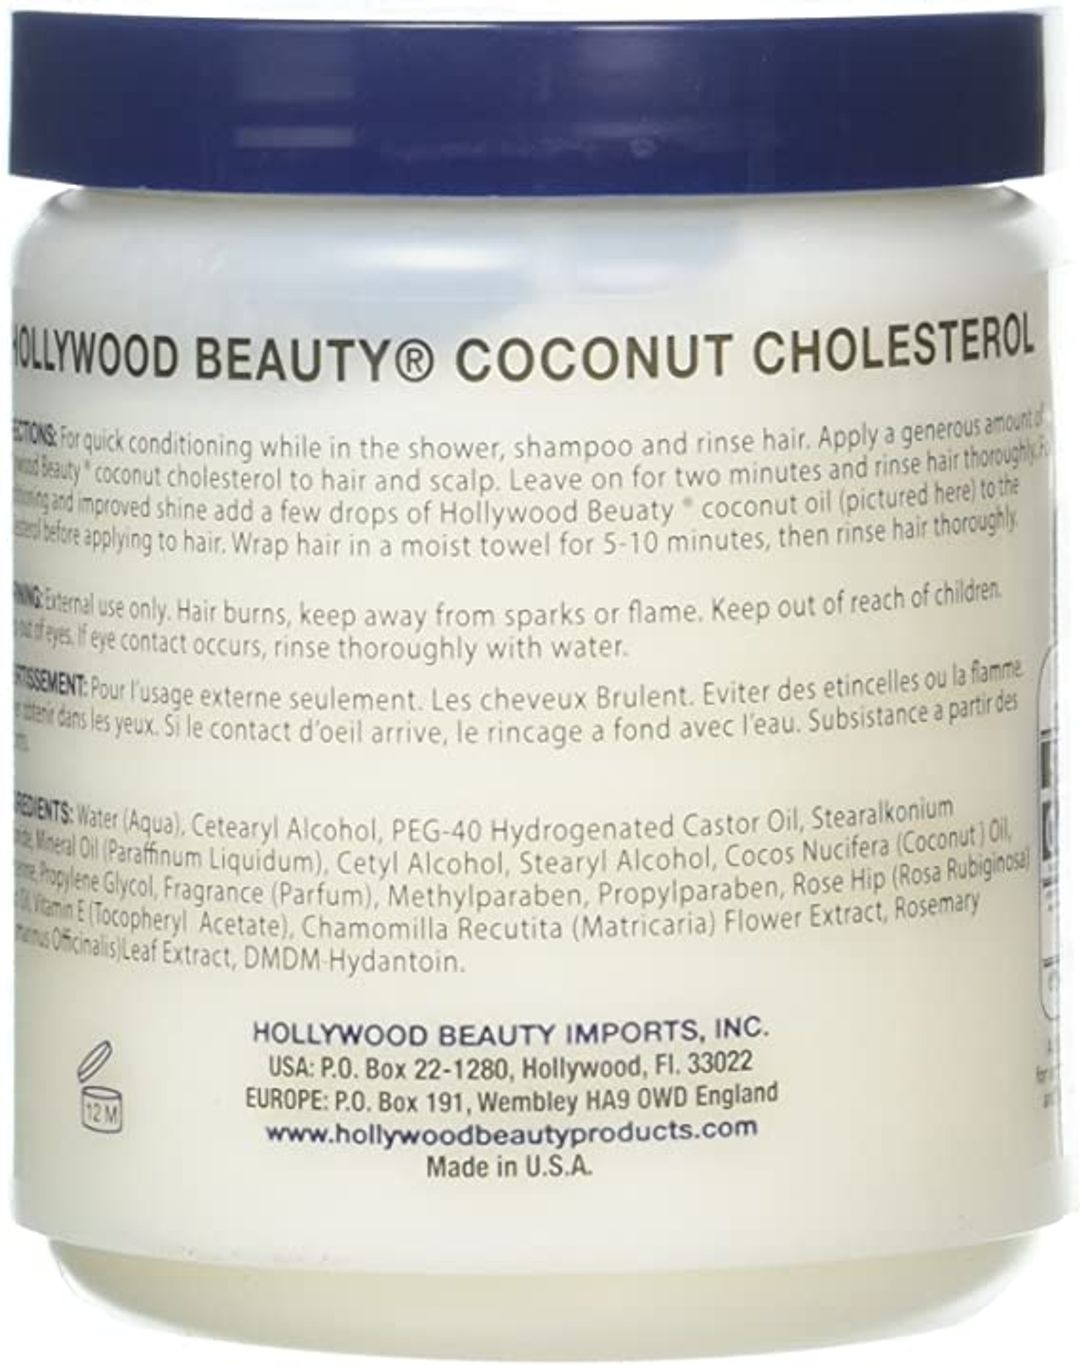 Hollywood Beauty Coconut Cholesterol - 20oz